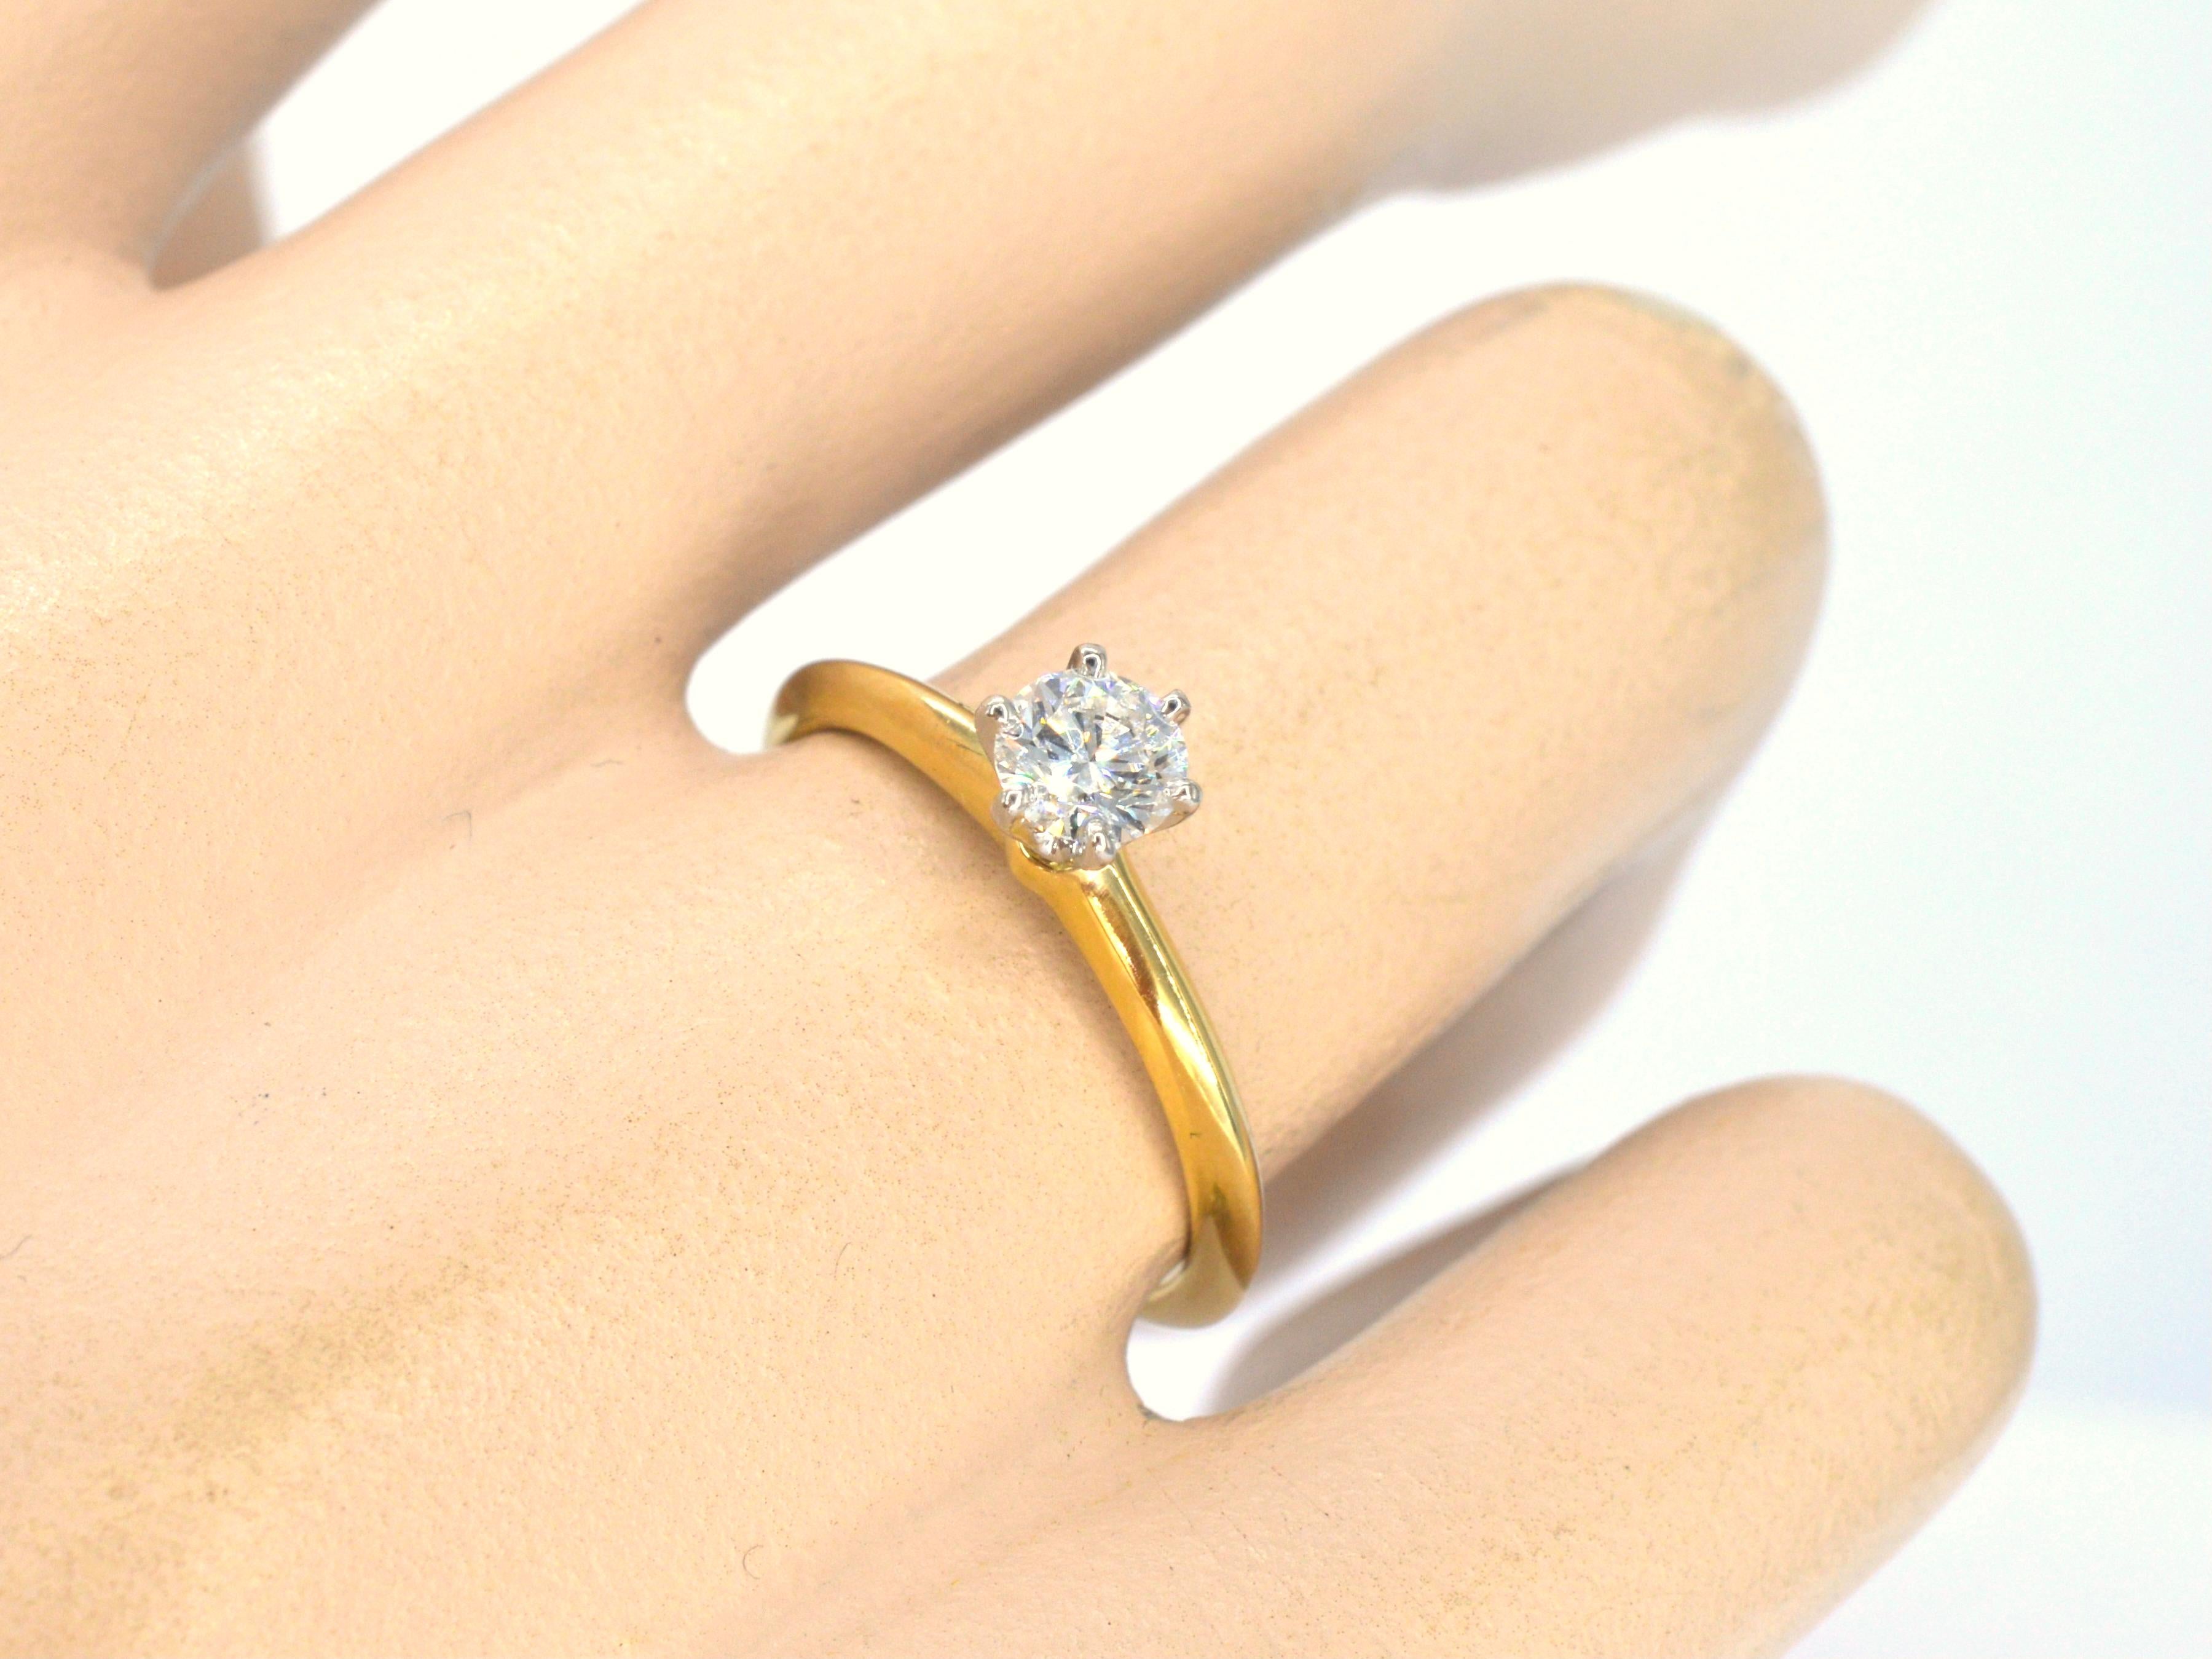 Brilliant Cut Platinum Tiffany & Co Ring with a Diamond